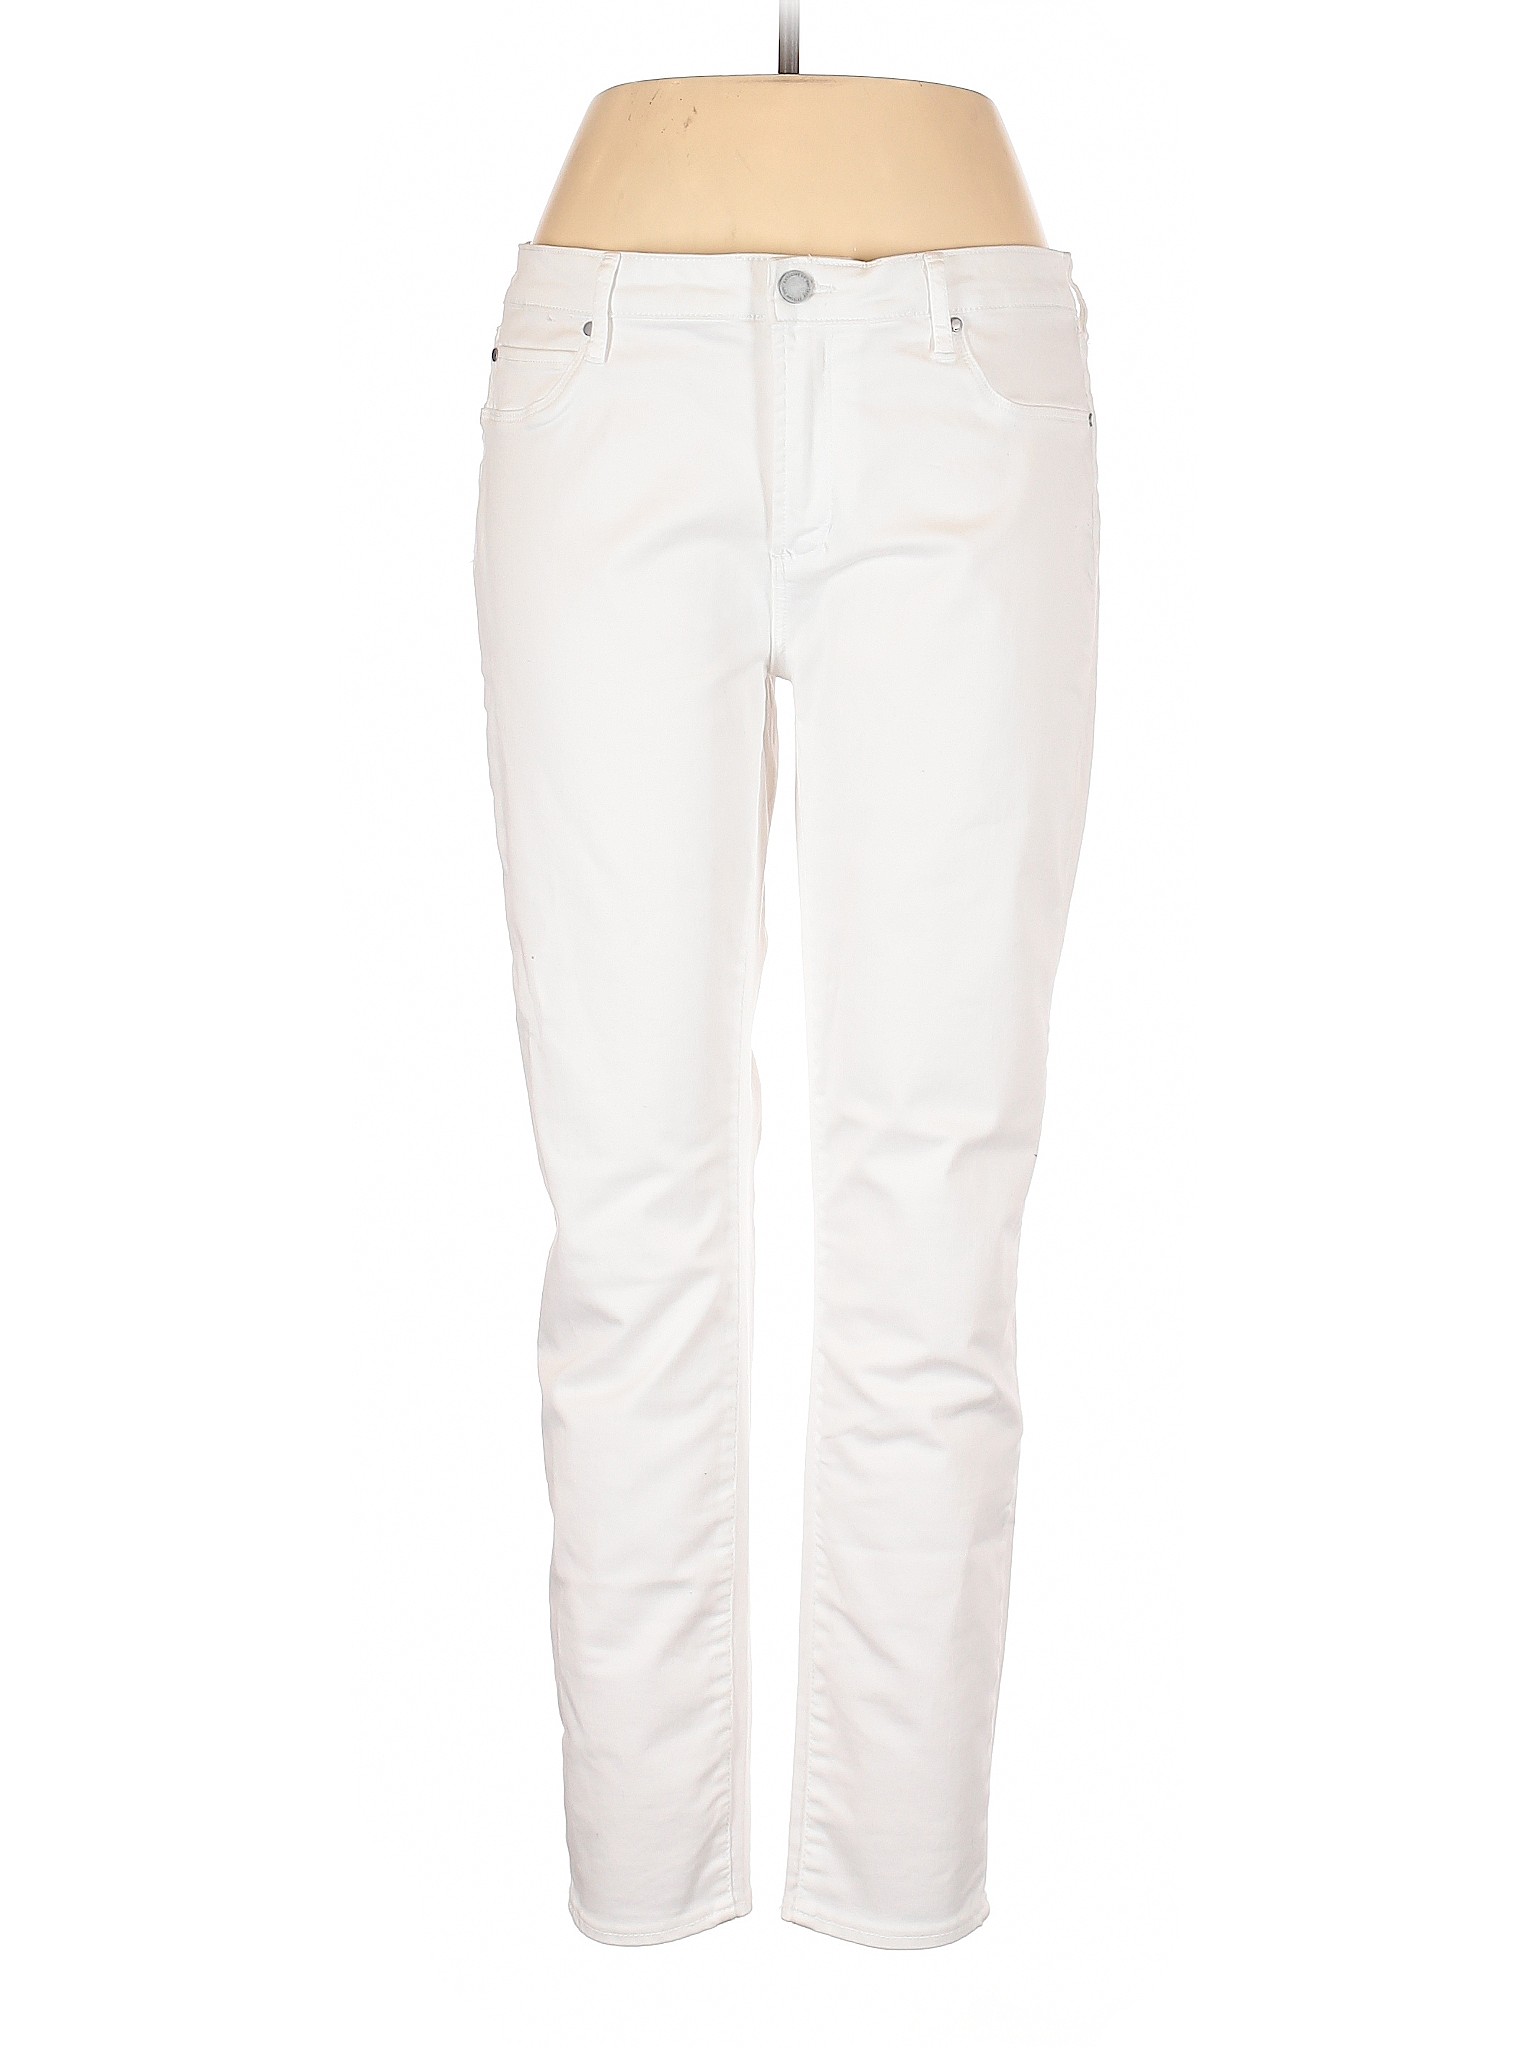 Articles of Society Women White Jeans 34W | eBay